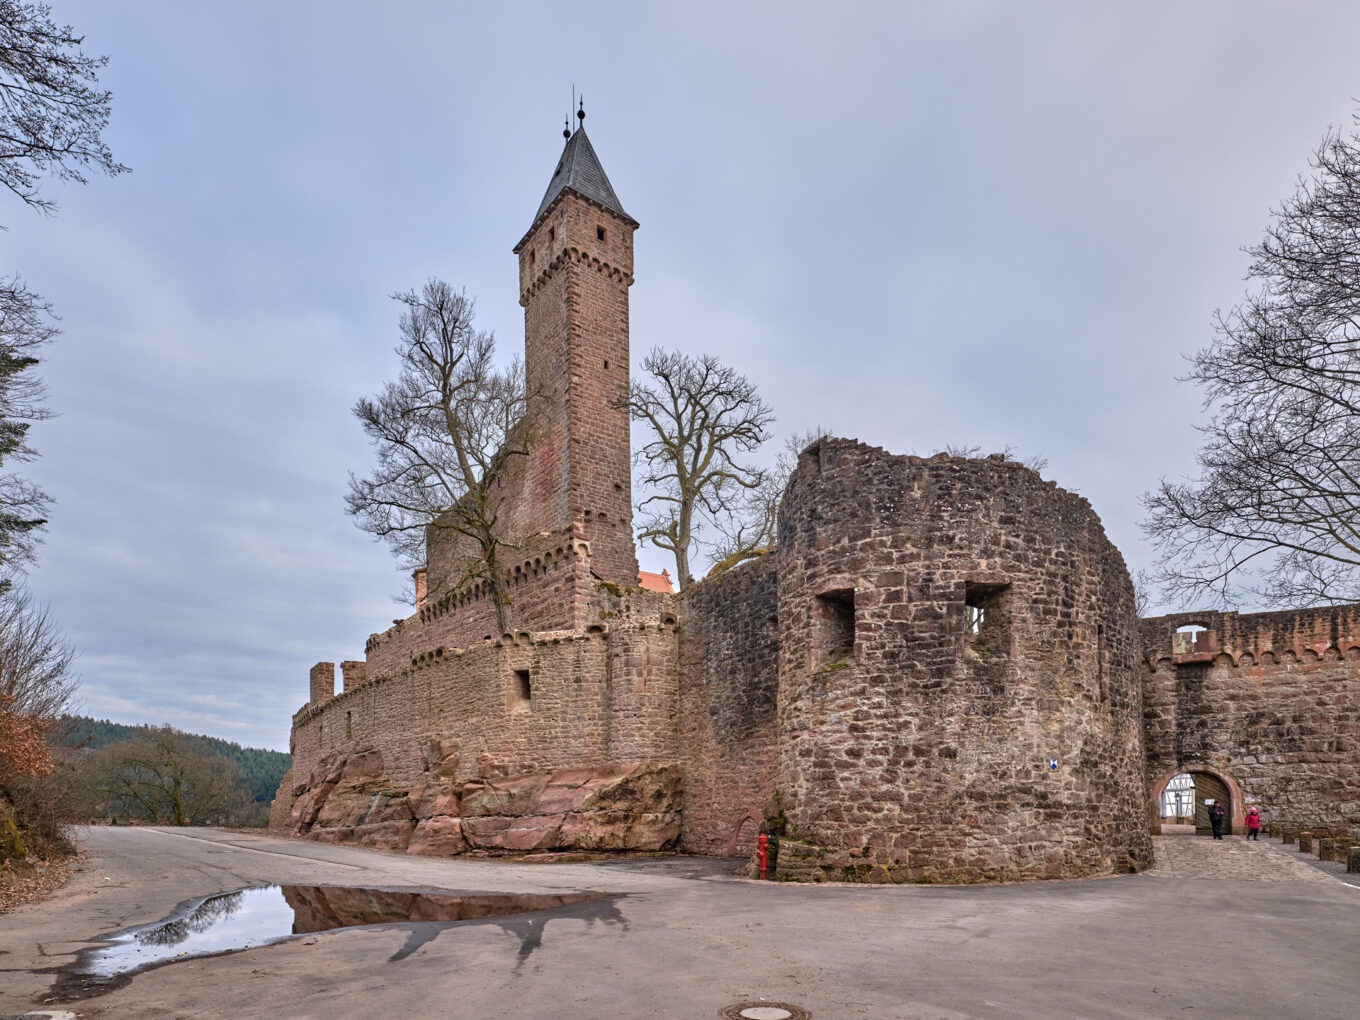 Hirschhorn Castle with keep